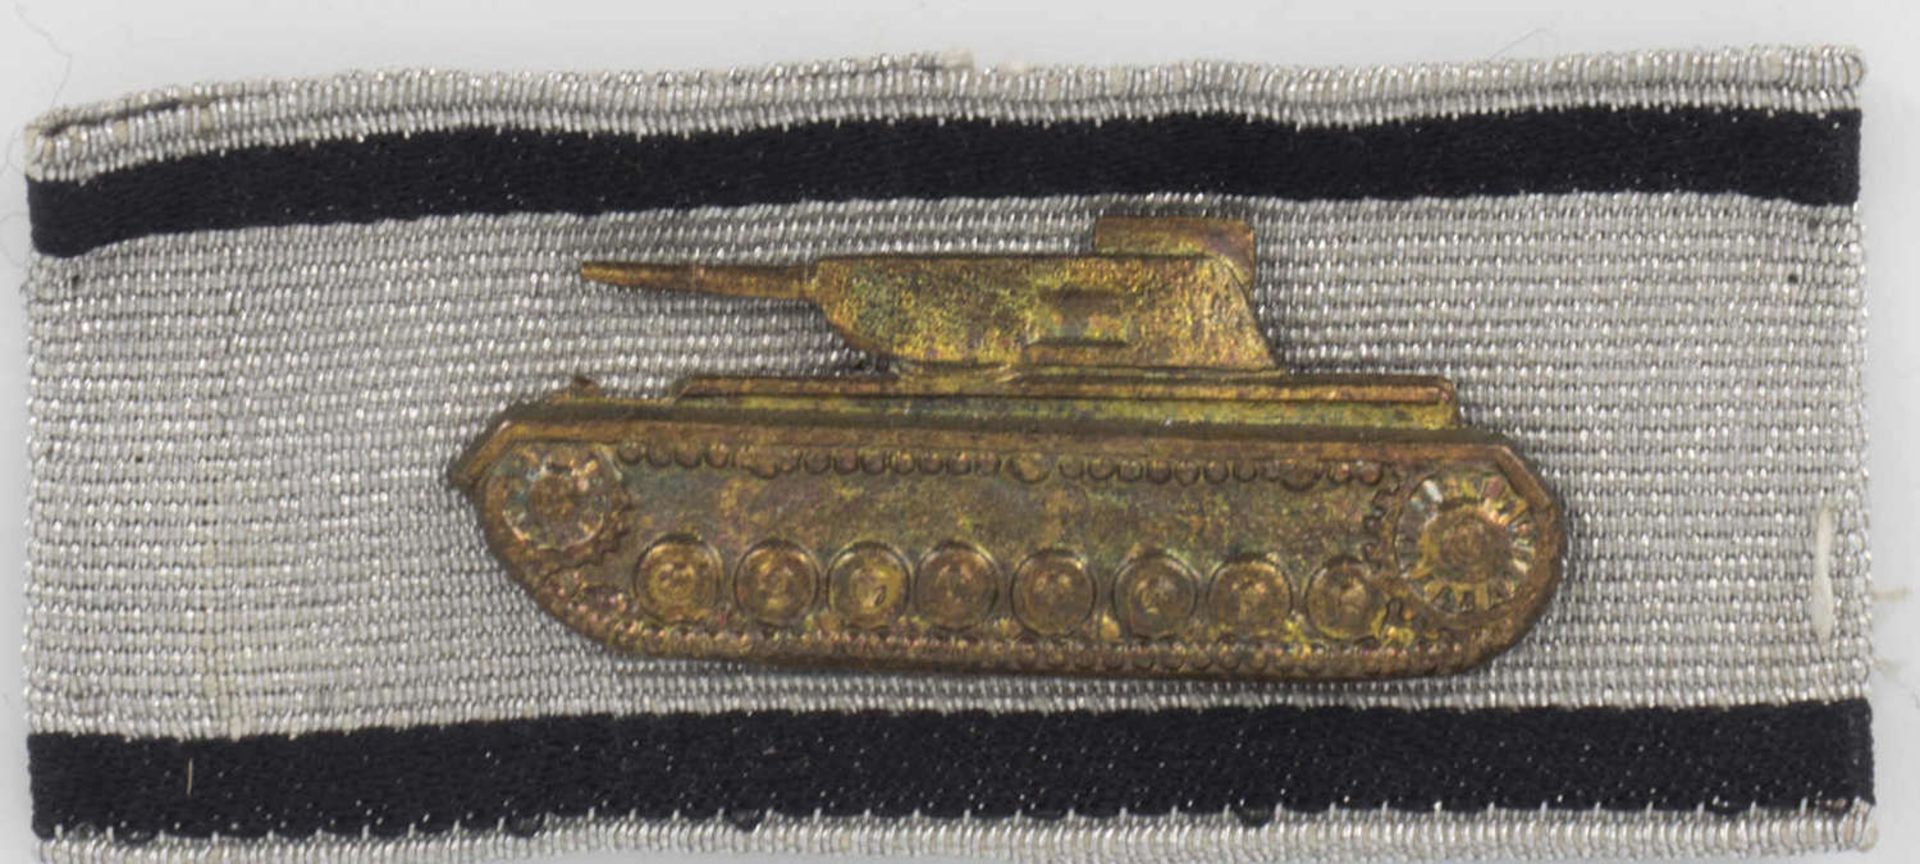 Tank destroyer badge, collector's item.